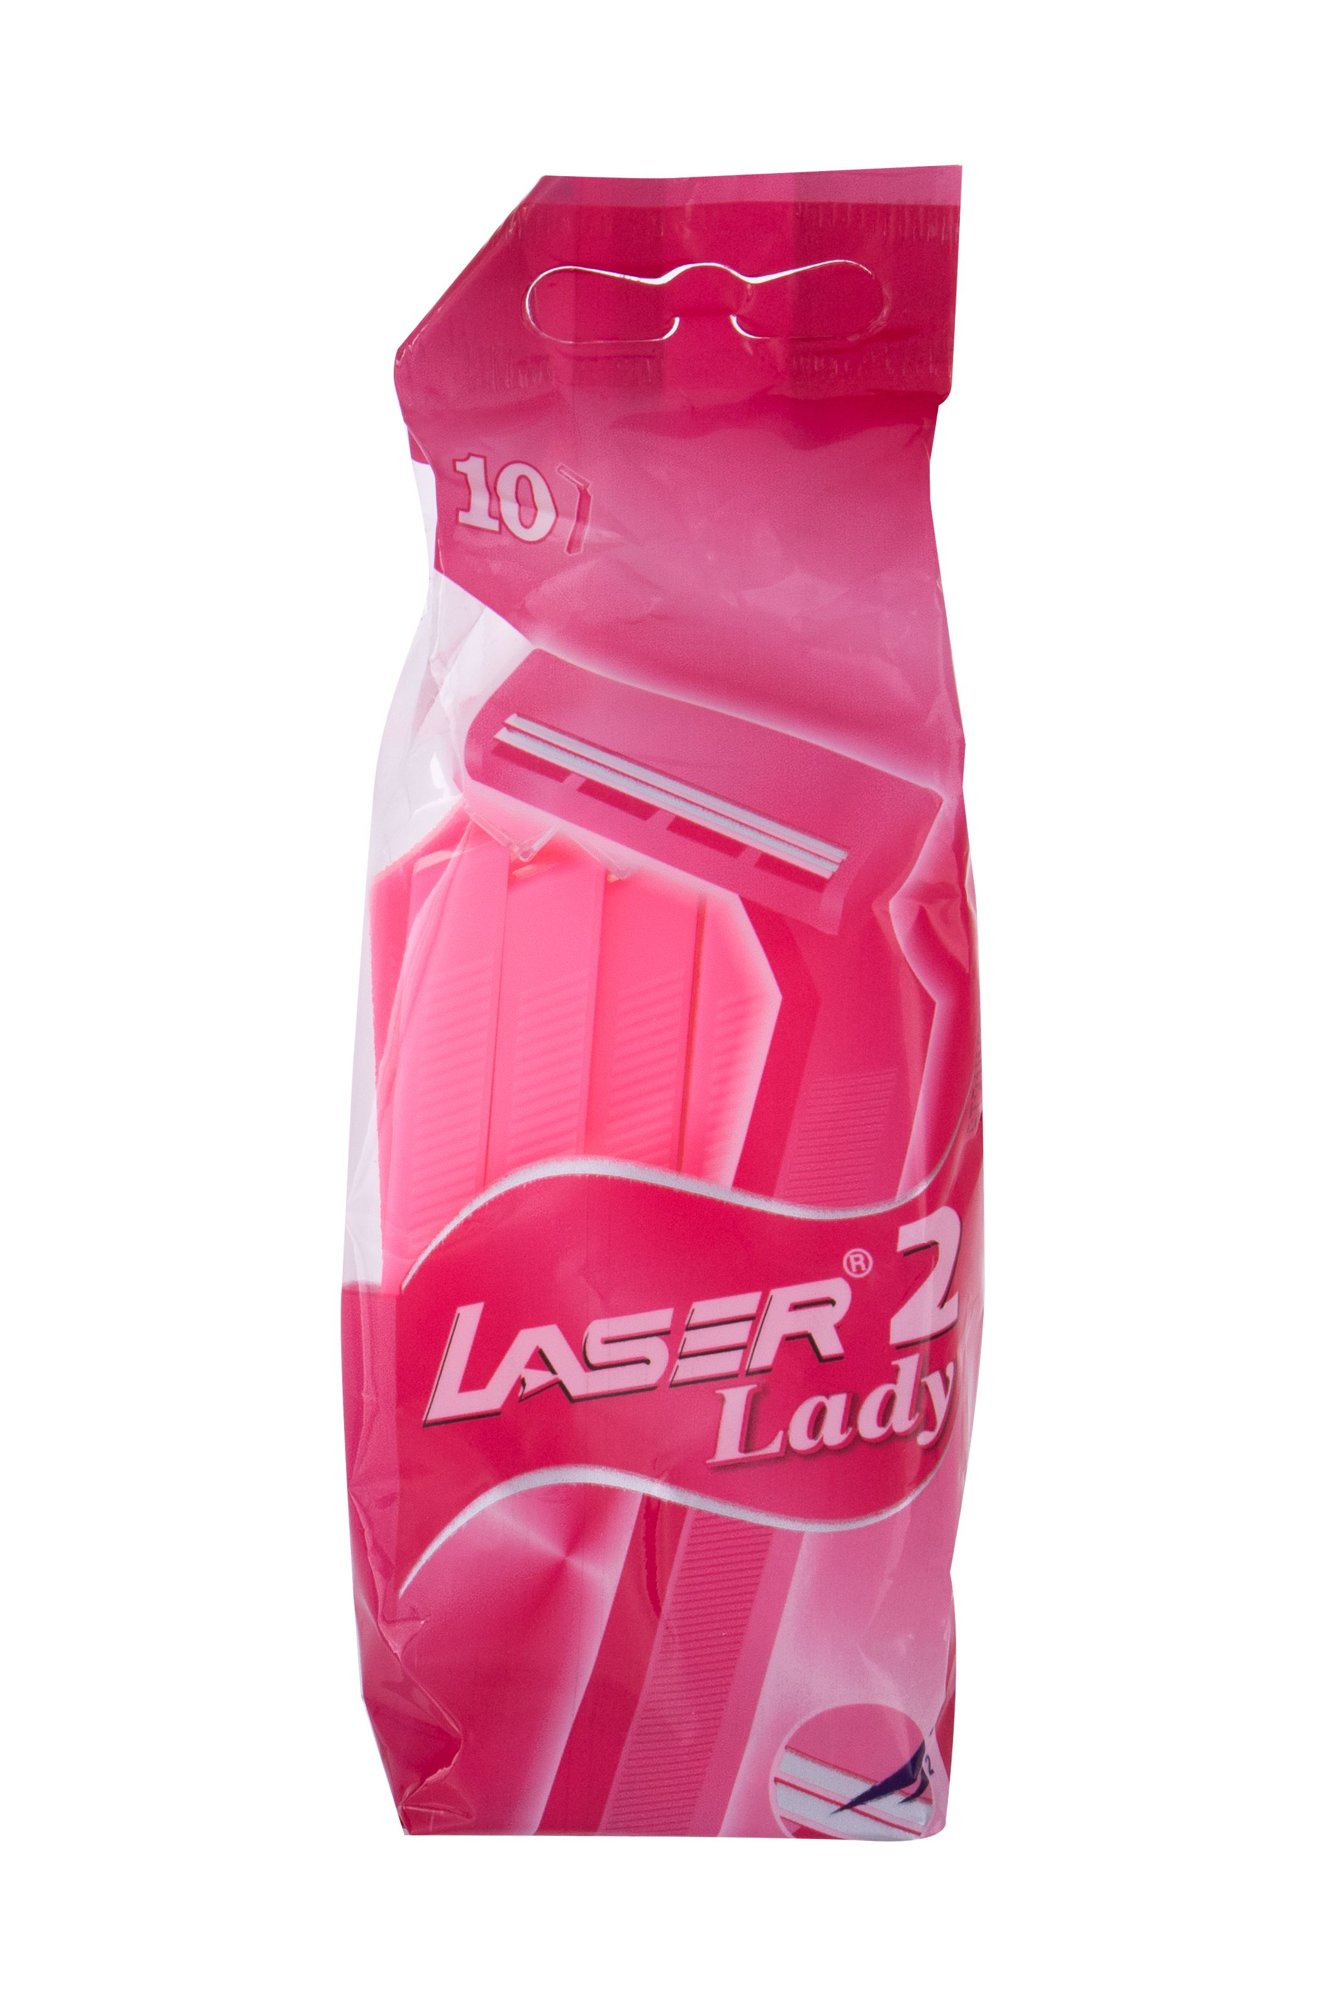 Laser 2 Lady skustuvas